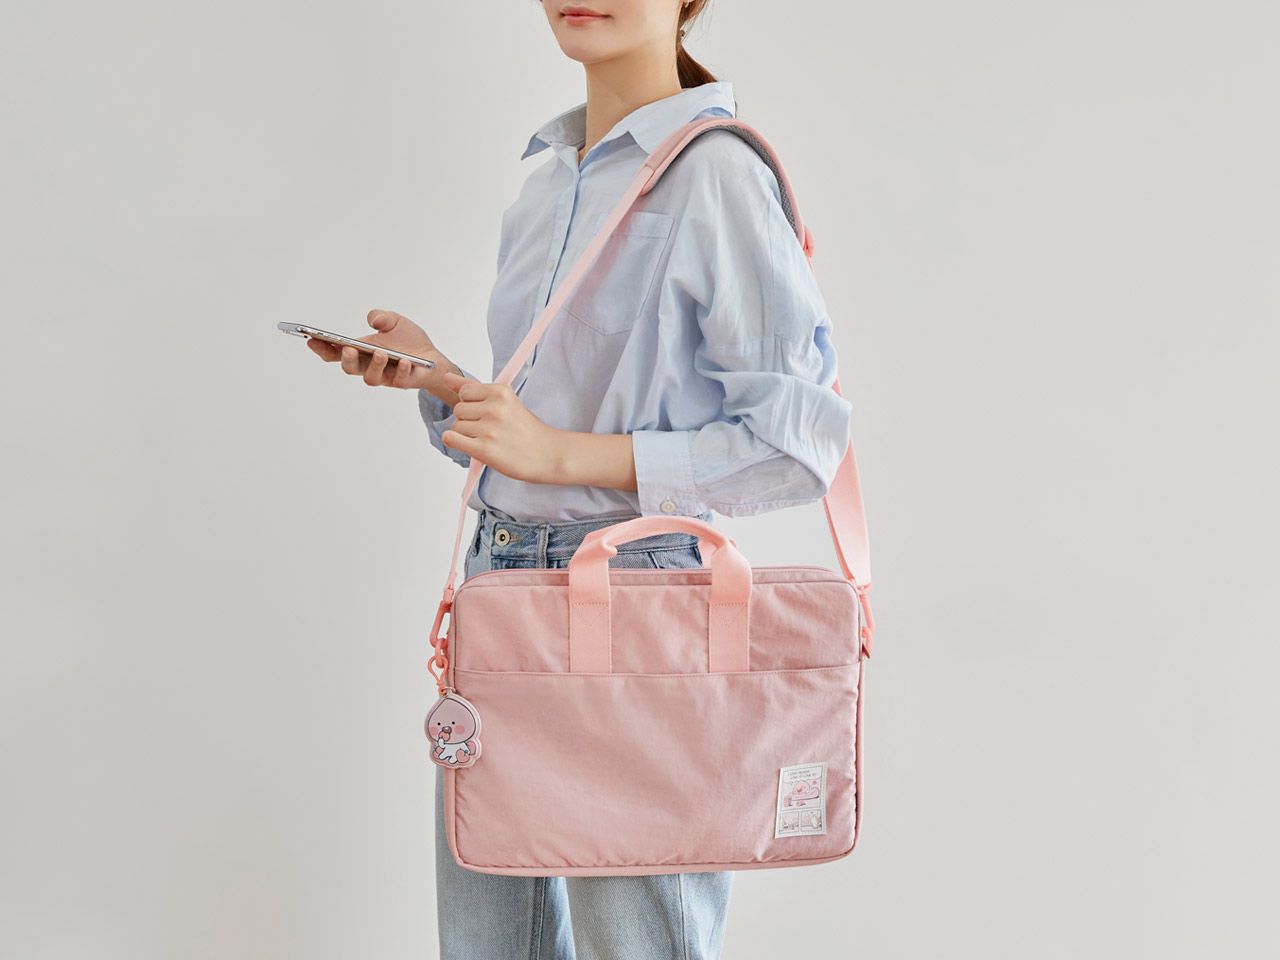 [KAKAO FRIENDS] 桃子 筆電包 包包 單肩包 韓國 韓國代購 屁桃 絕版 限量 公事包 偷偷摸摸🐢